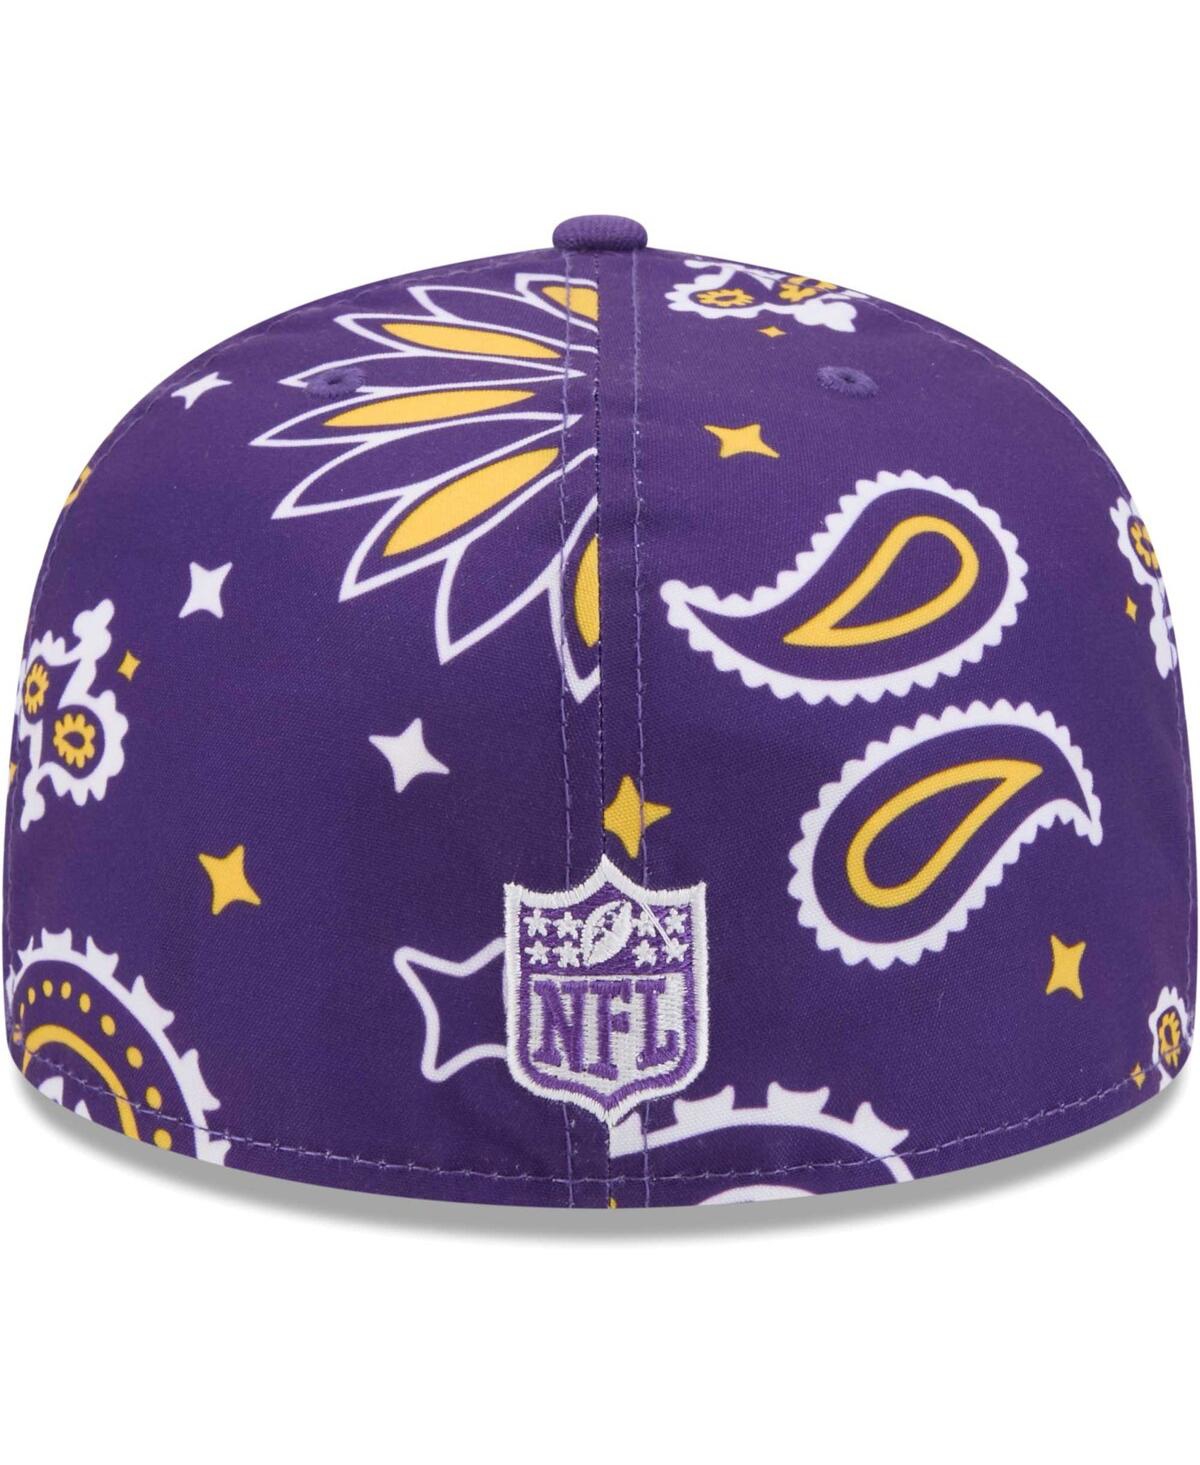 Shop New Era Men's Purple Minnesota Vikings Paisley 59fifty Fitted Hat